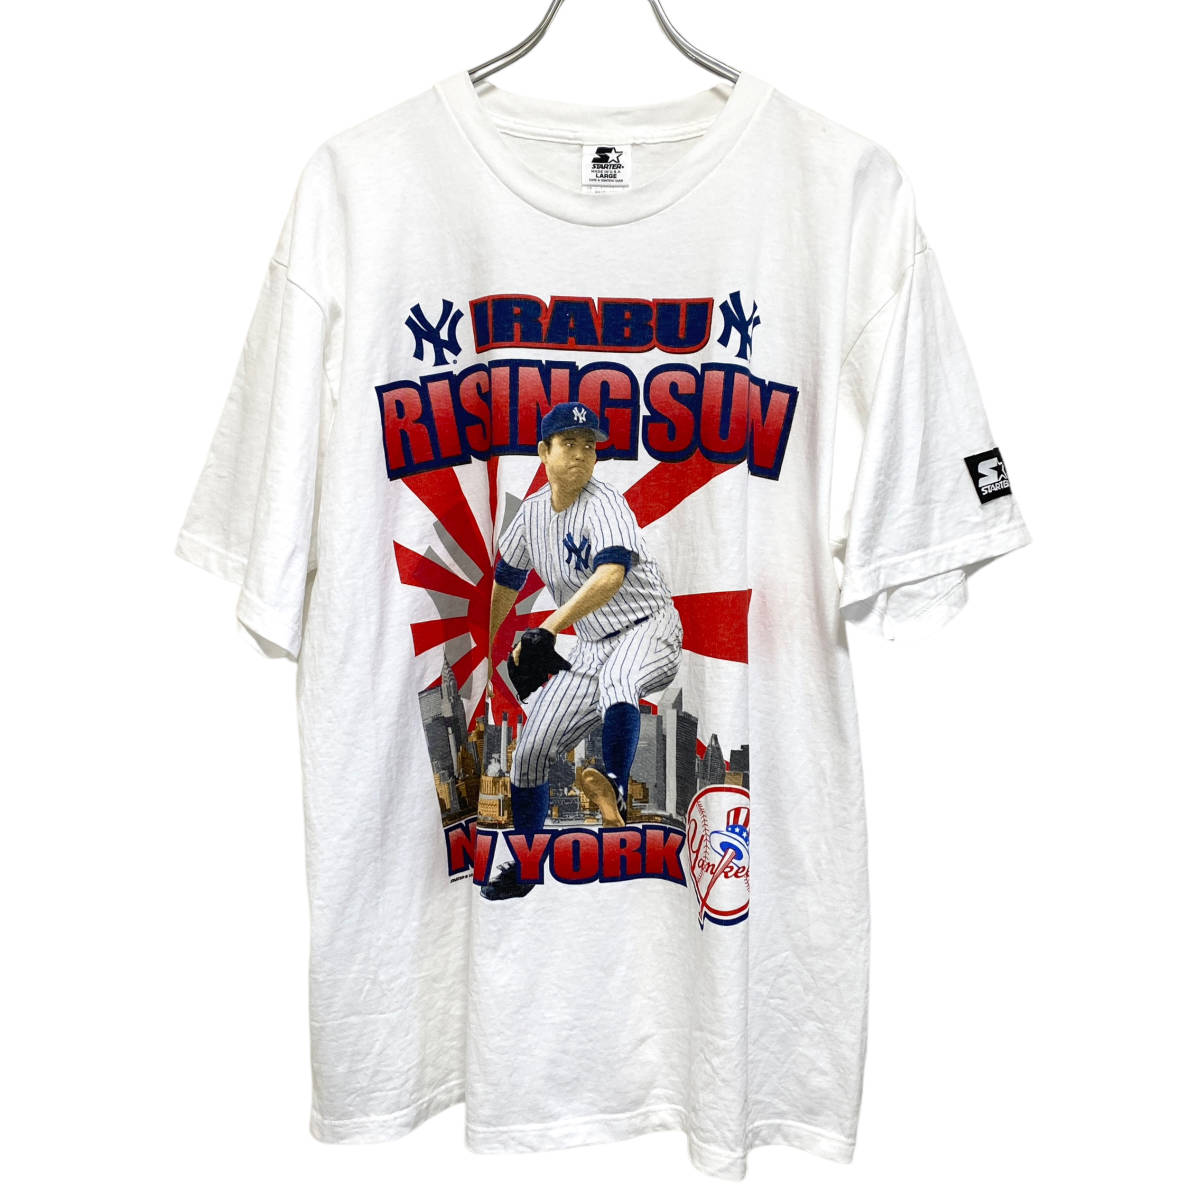 USA製 90s STARTER スターター ニューヨークヤンキース 伊良部 Tシャツ L 白 メンズ 野球 MLB ビンテージ 送料185円 23-1121